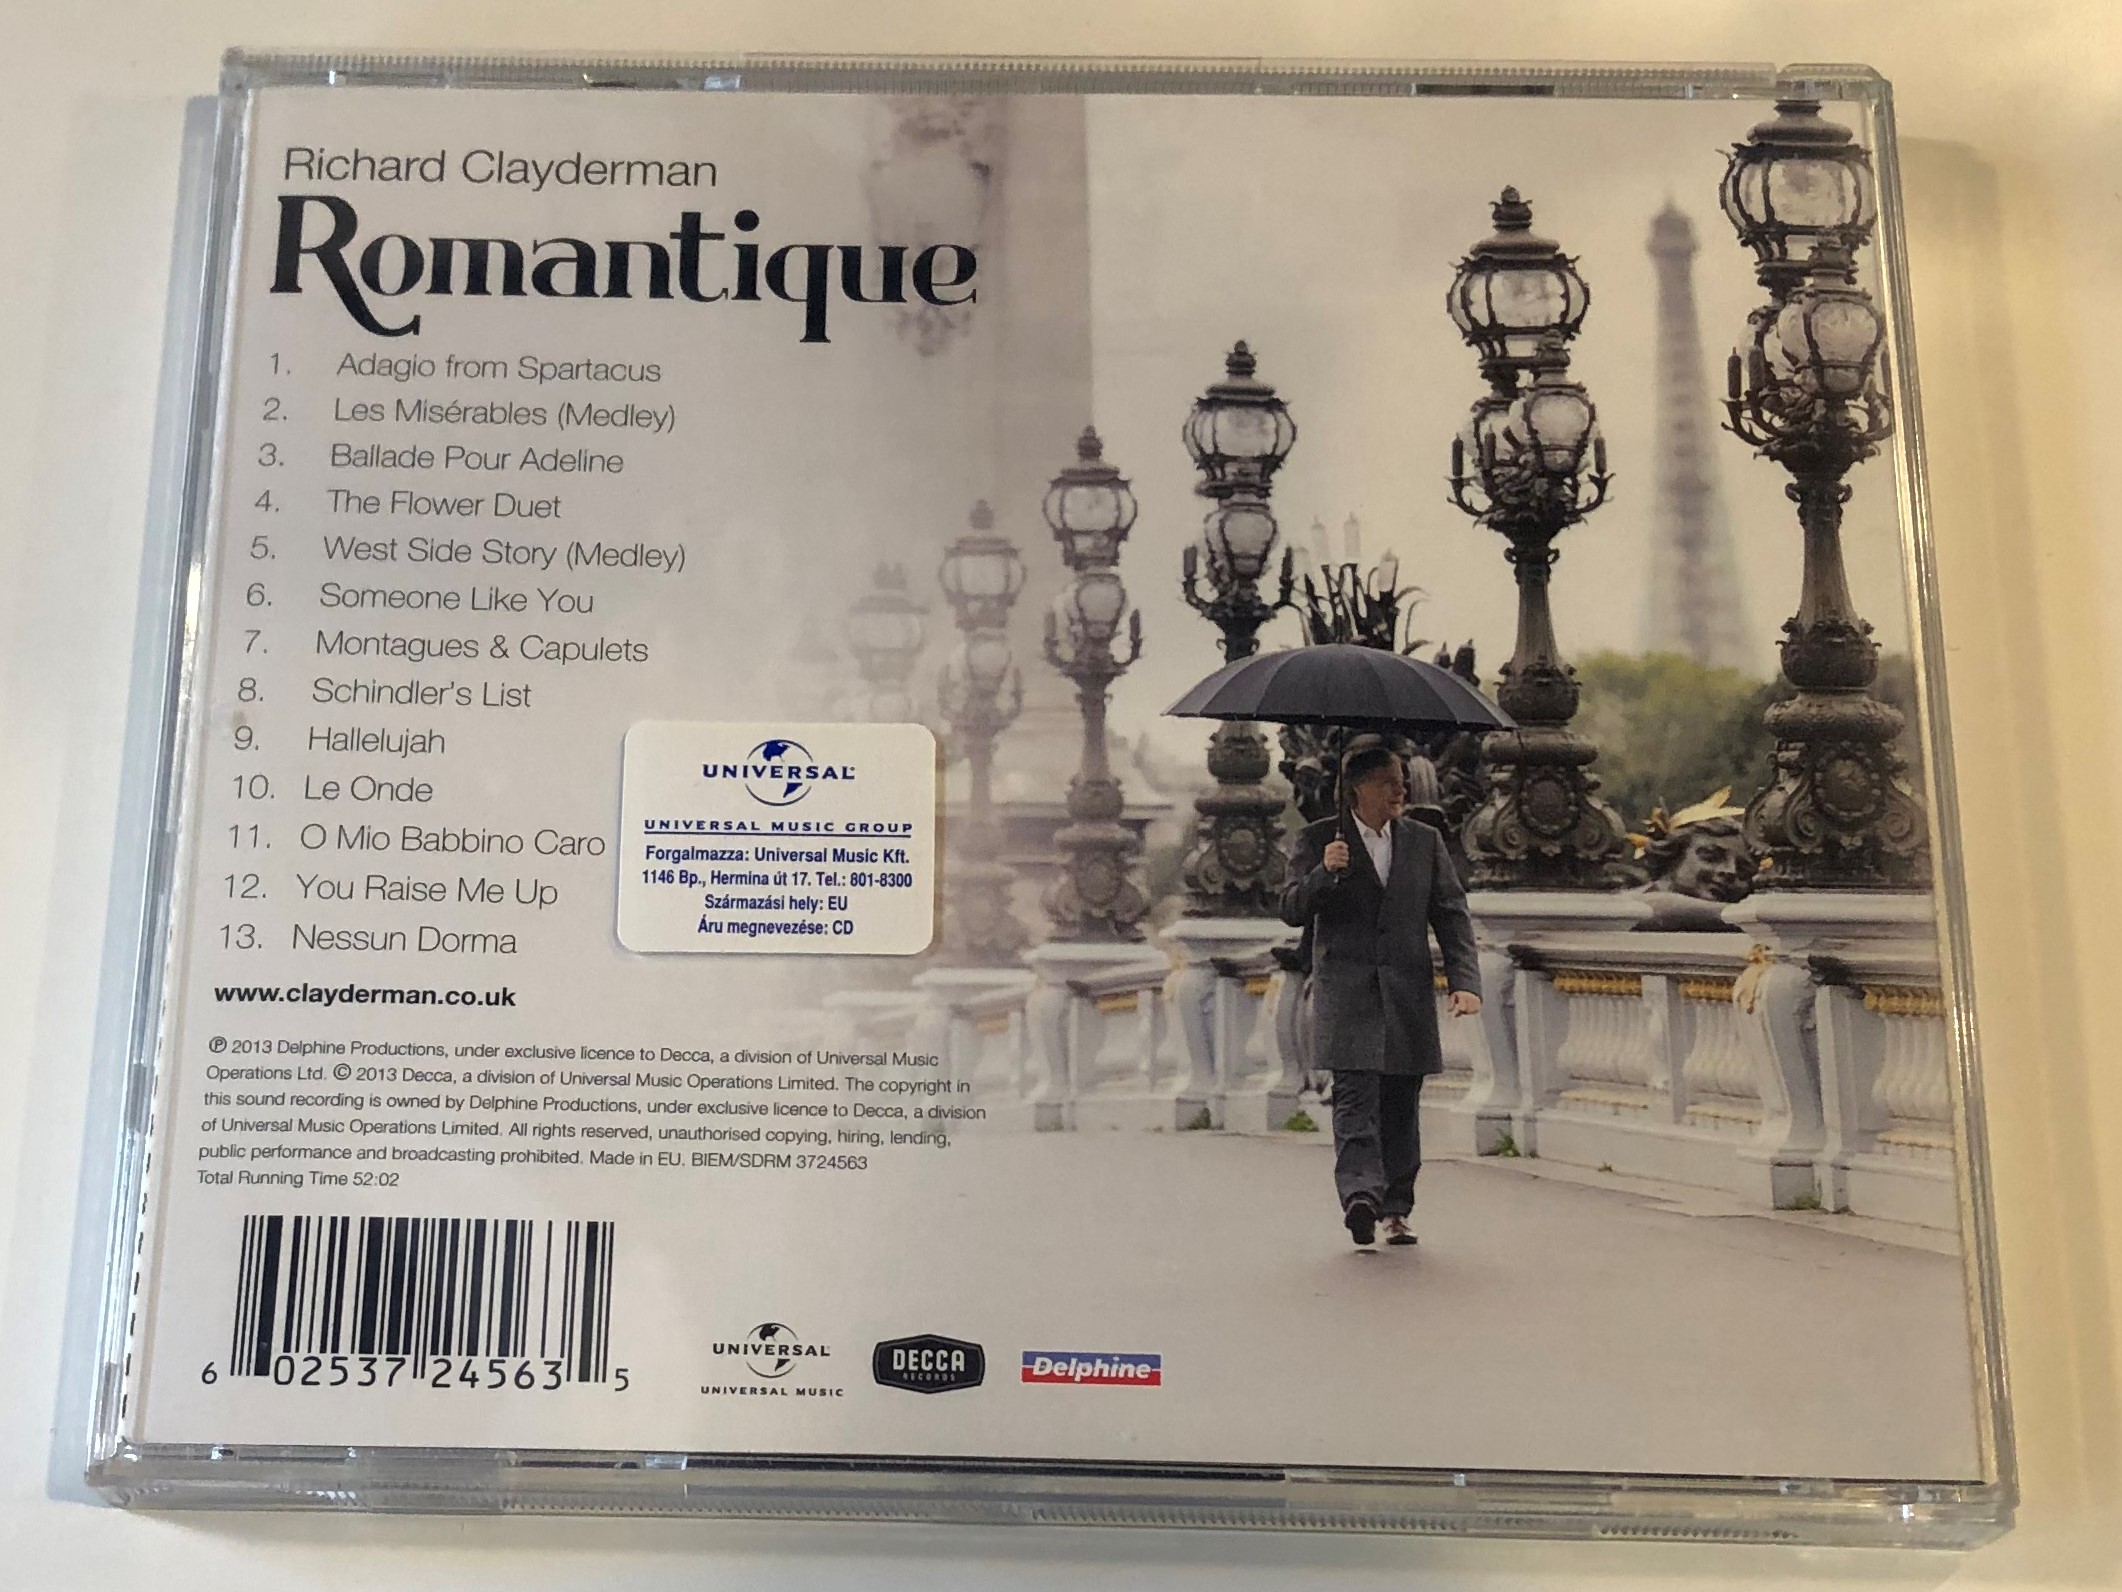 richard-clayderman-romantique-delphine-audio-cd-2013-3724563-2-.jpg